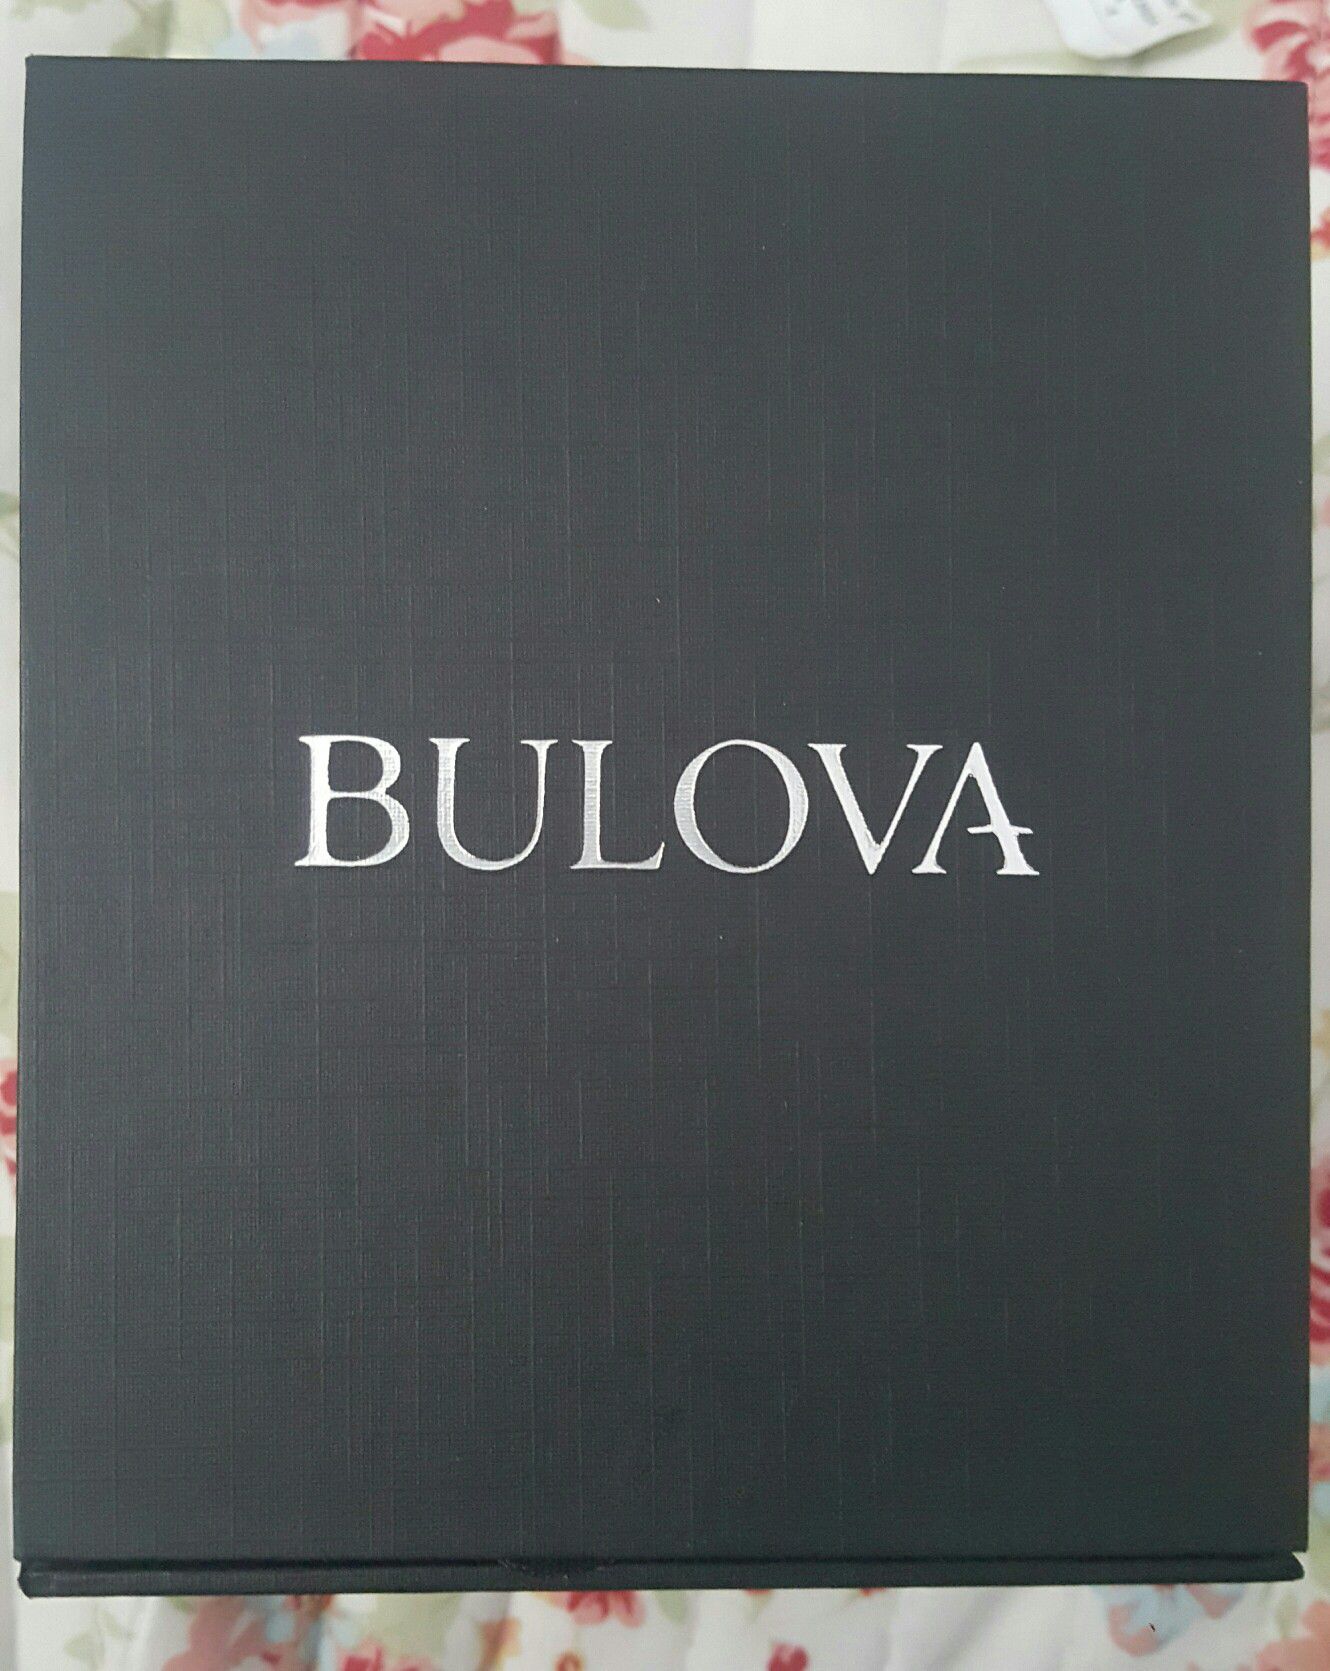 Bulova watch for men